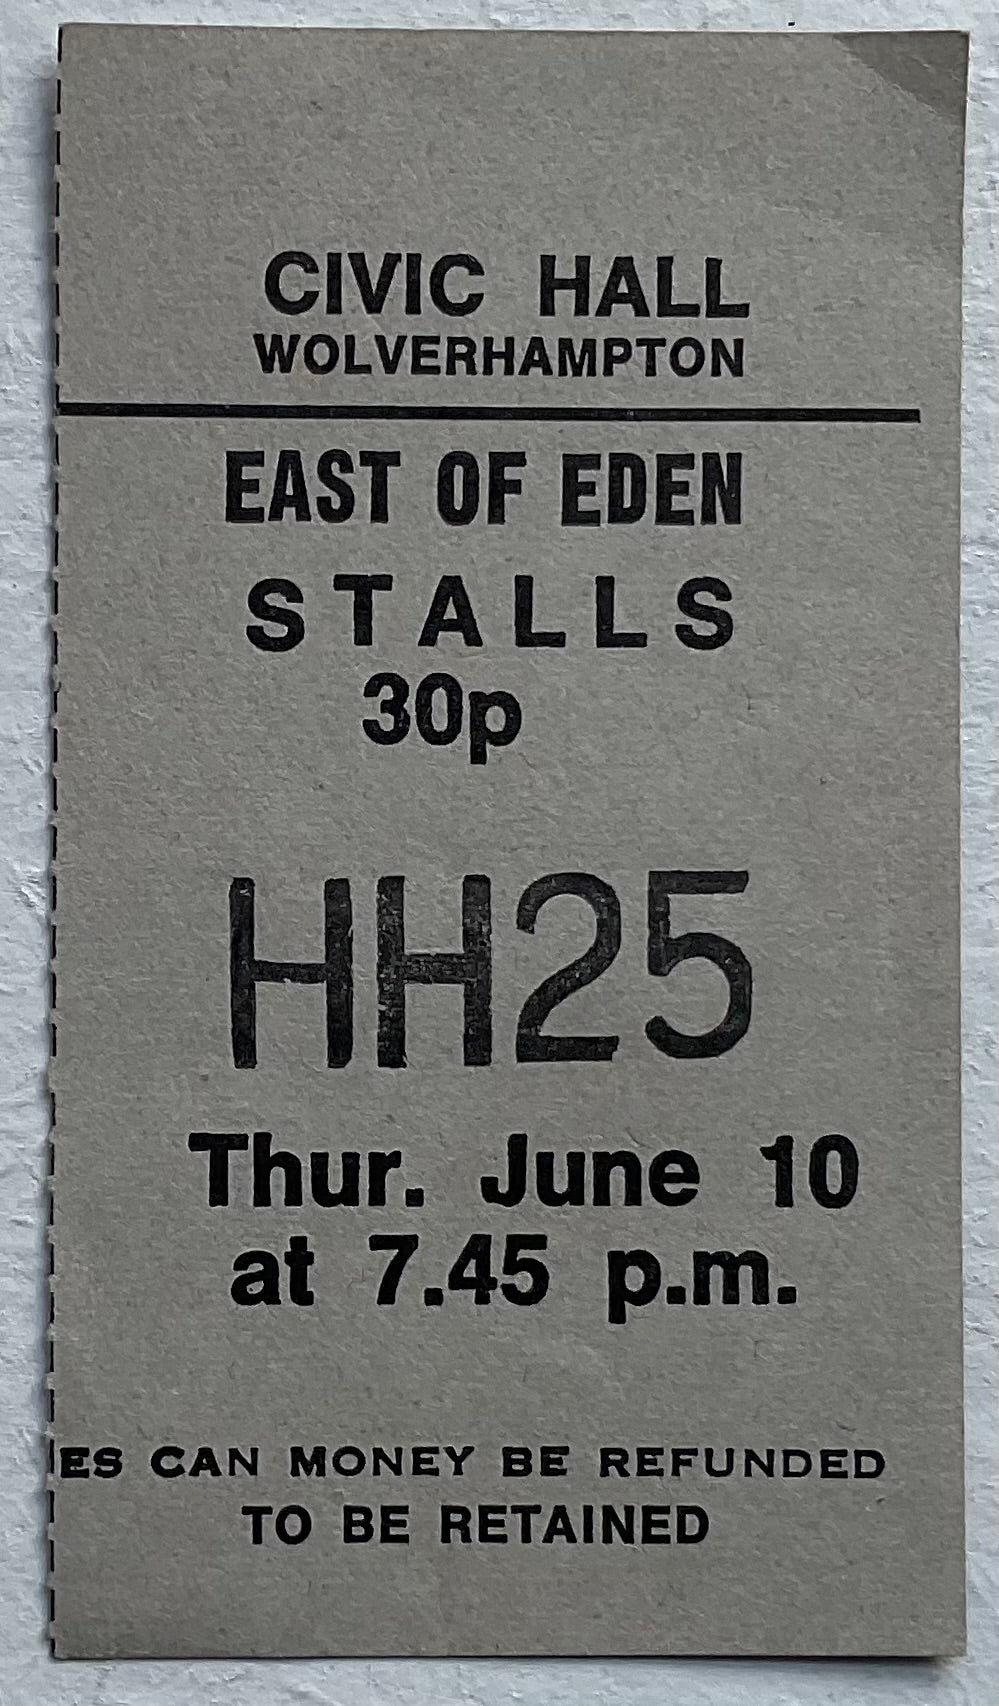 East of Eden Original Concert Ticket Civic Hall Wolverhampton 10th Jun 1971